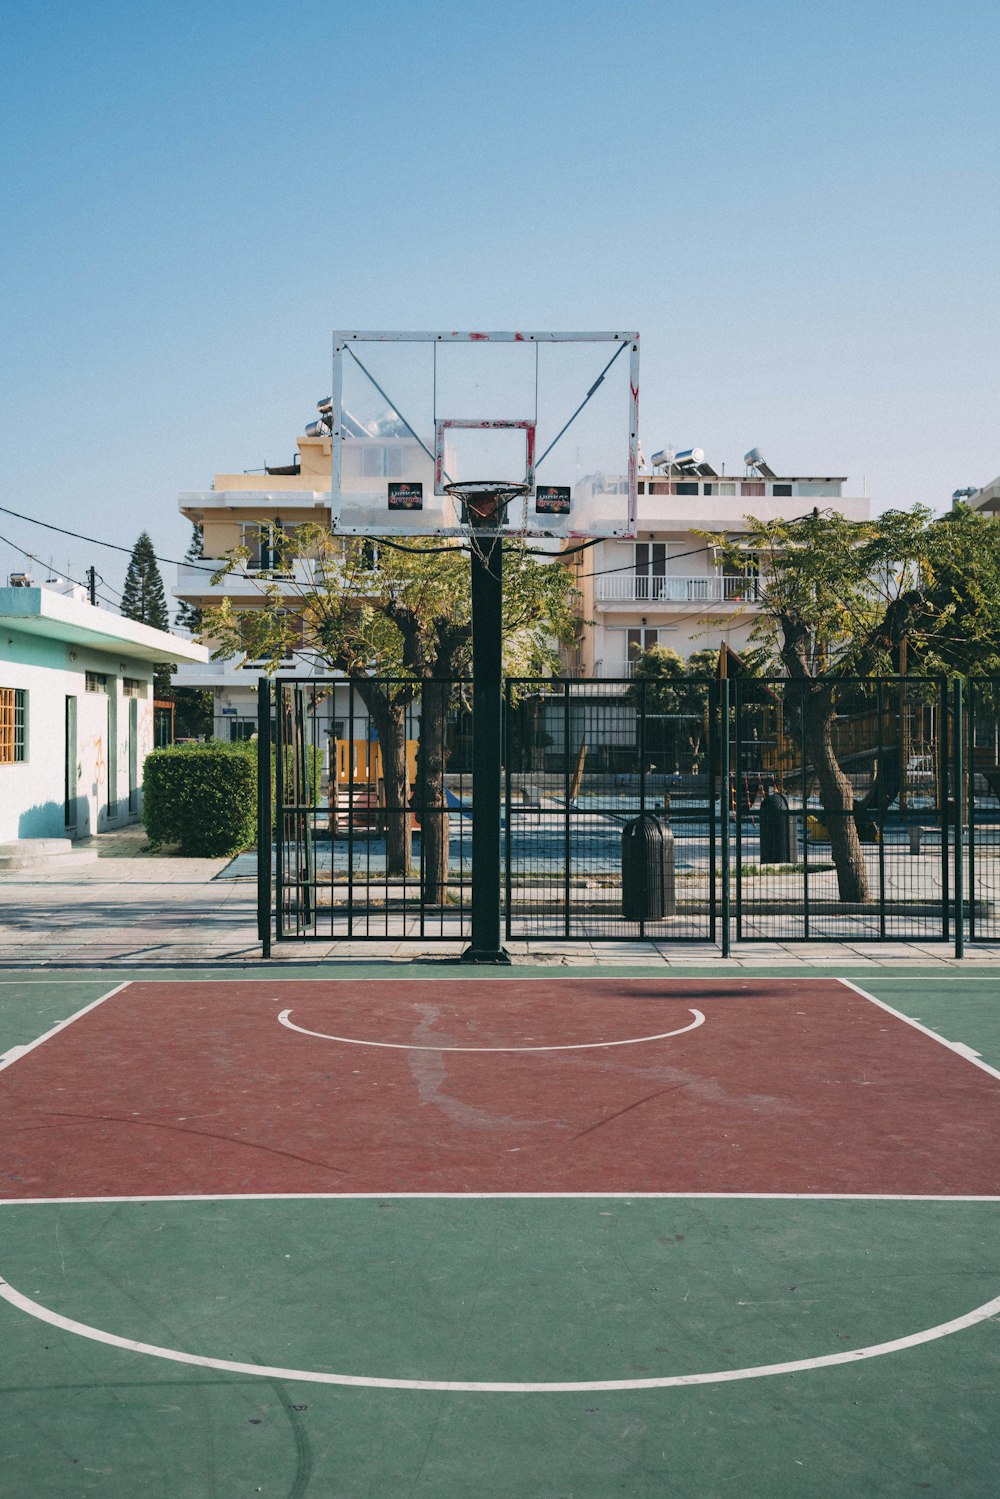 basketball system on empty playground